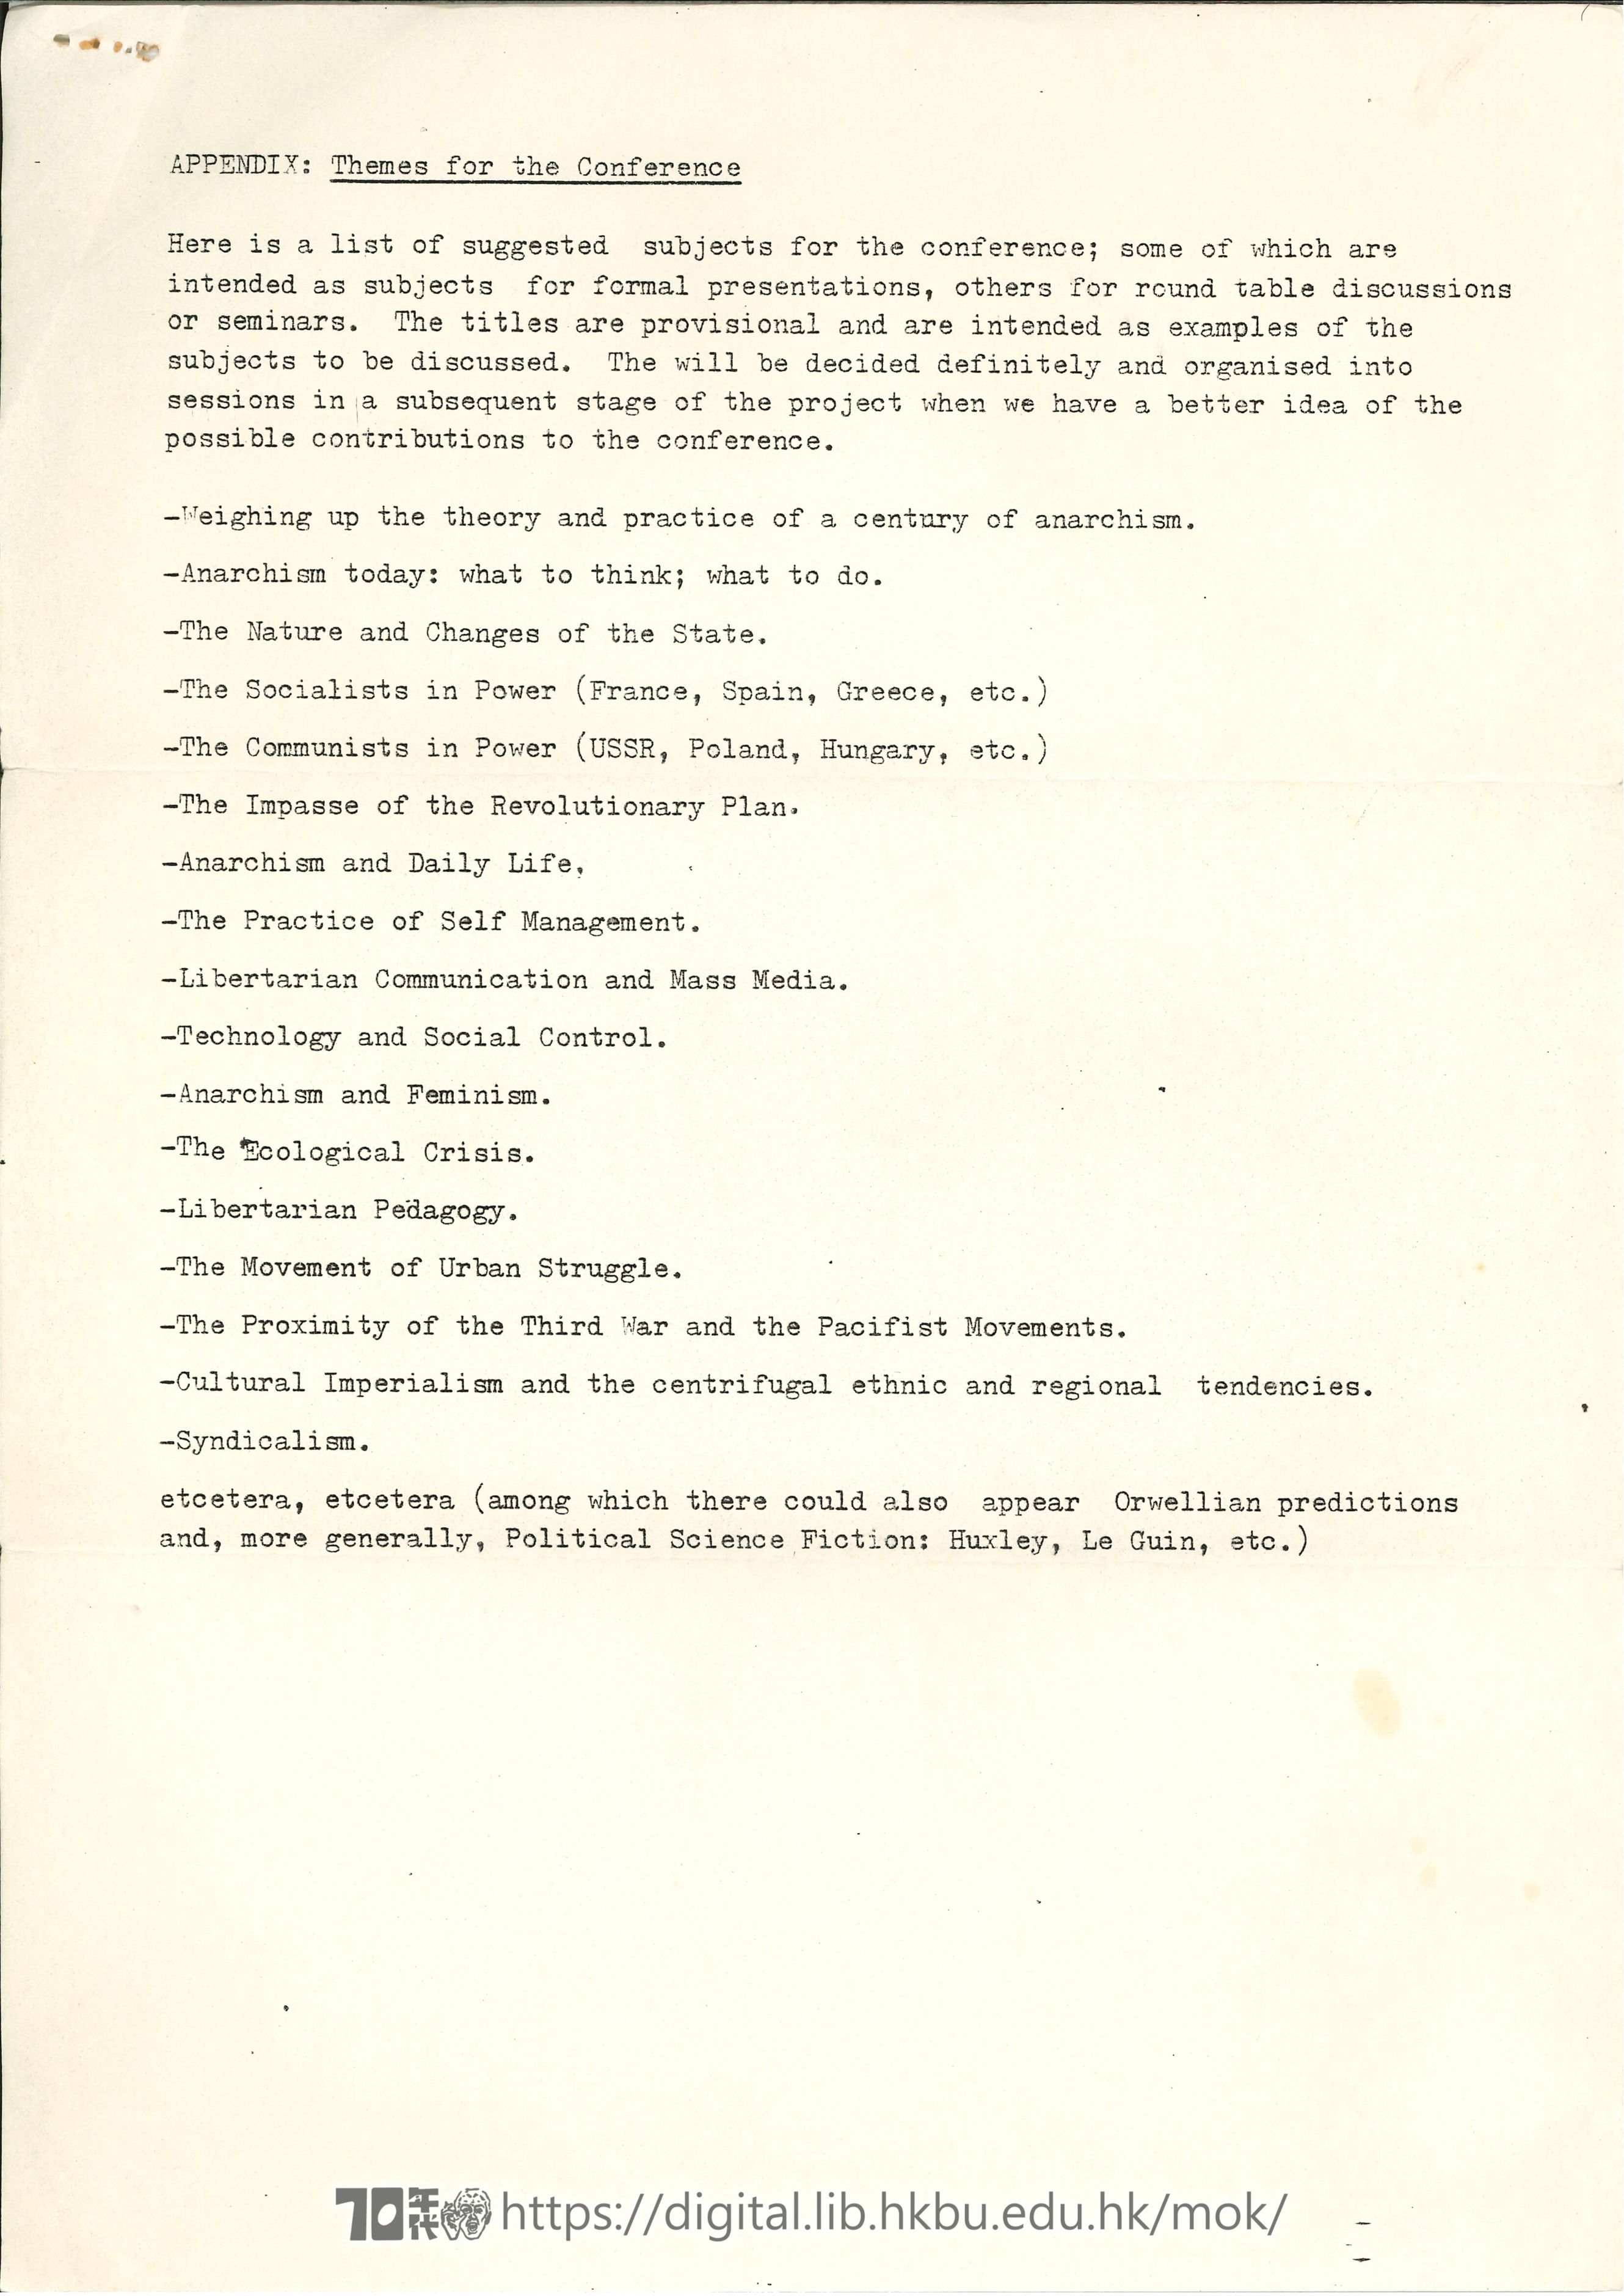   Letter about 1984 International Anarchist Gathering  